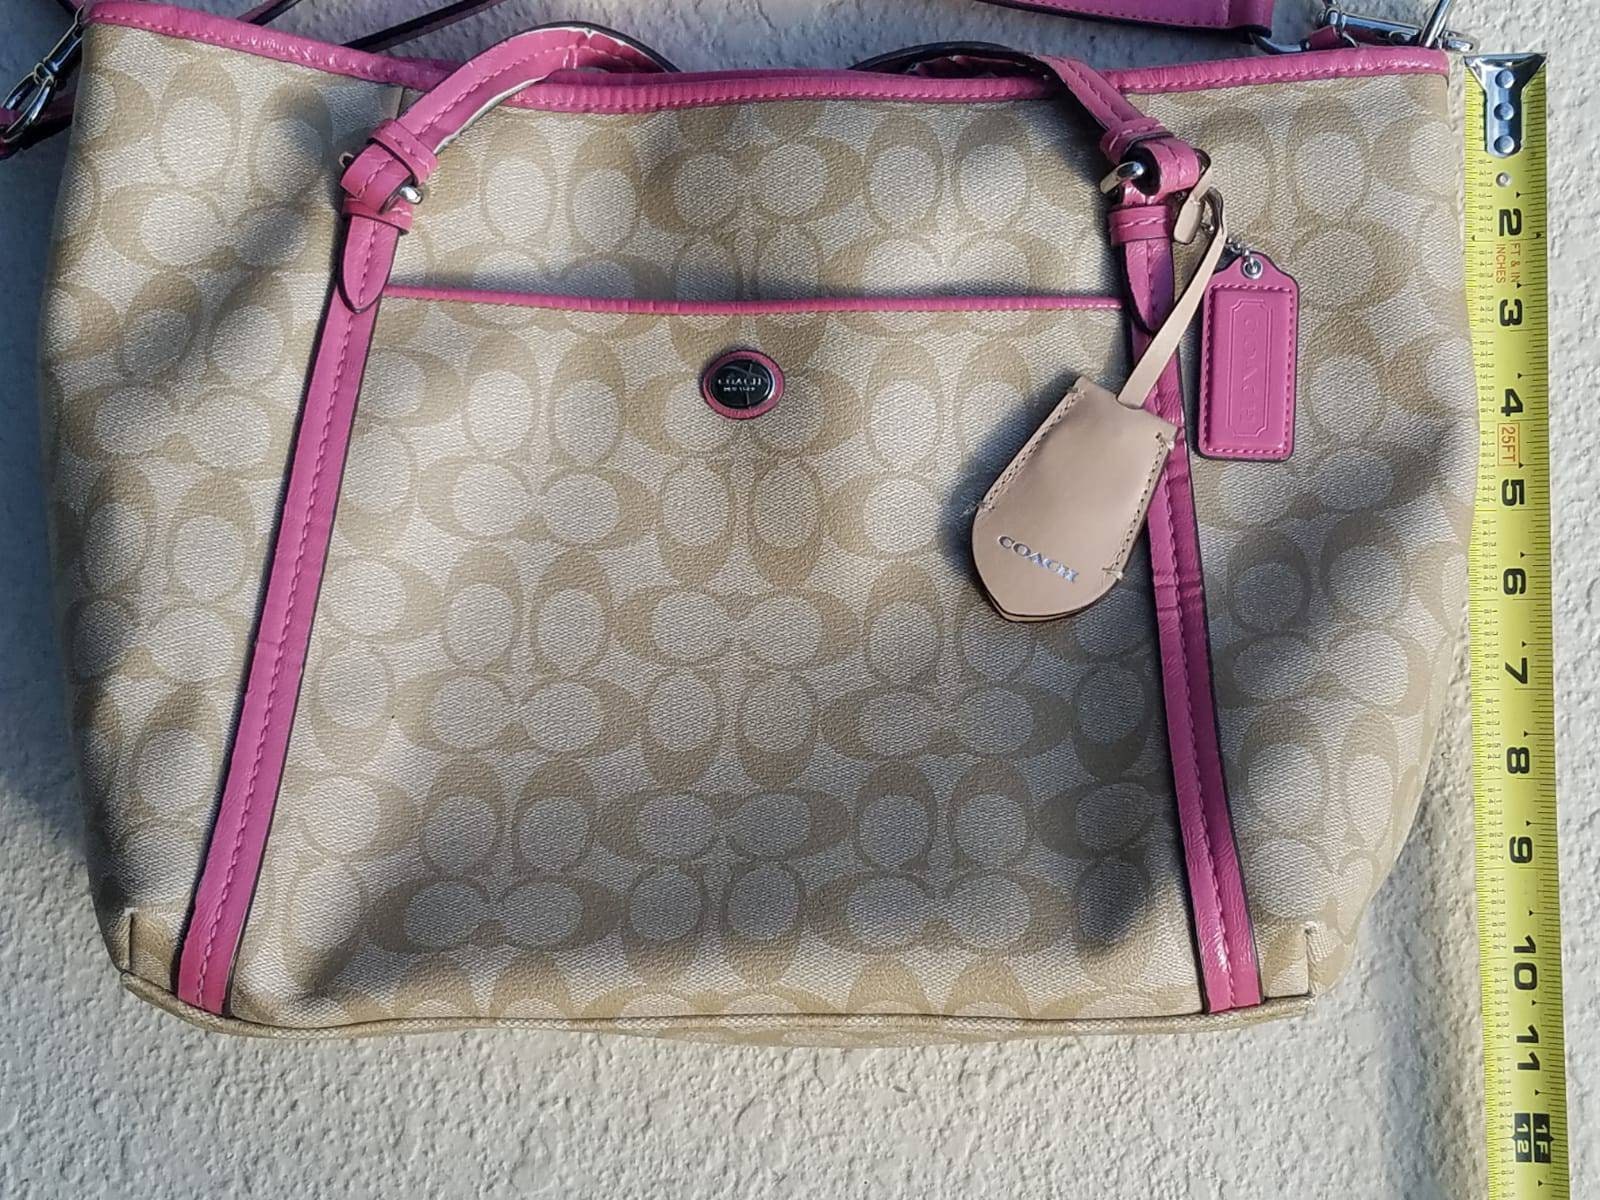 needed a pink purse 💗 #coach #coachbag #unreleased #unreleasedcoachpu, Coach Bag